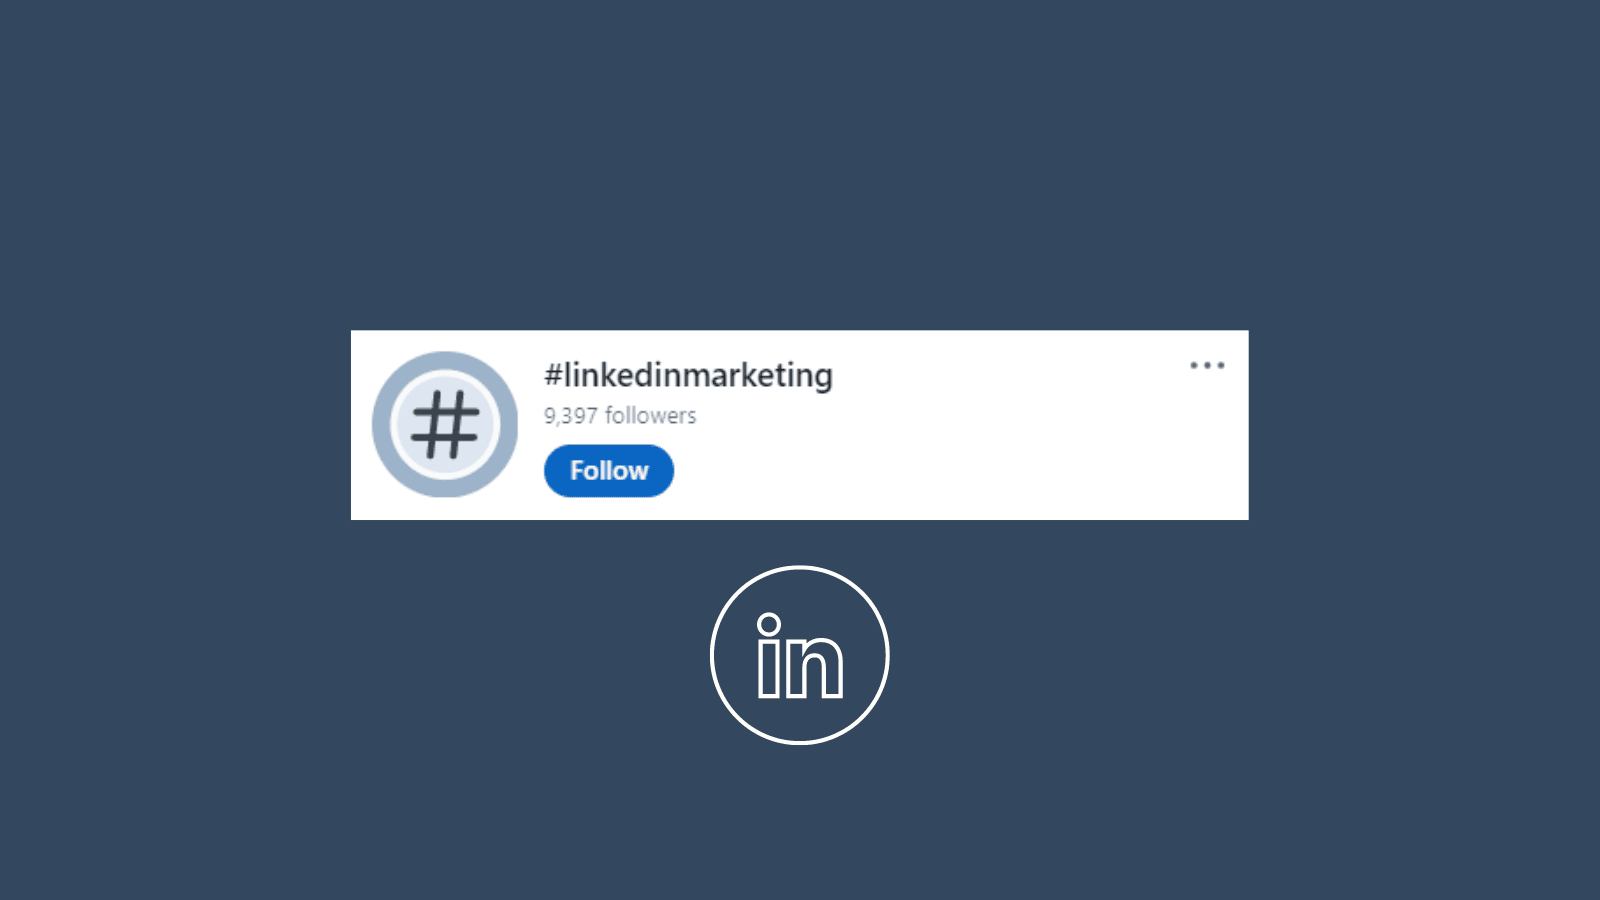 Hashtag best practices on LinkedIn